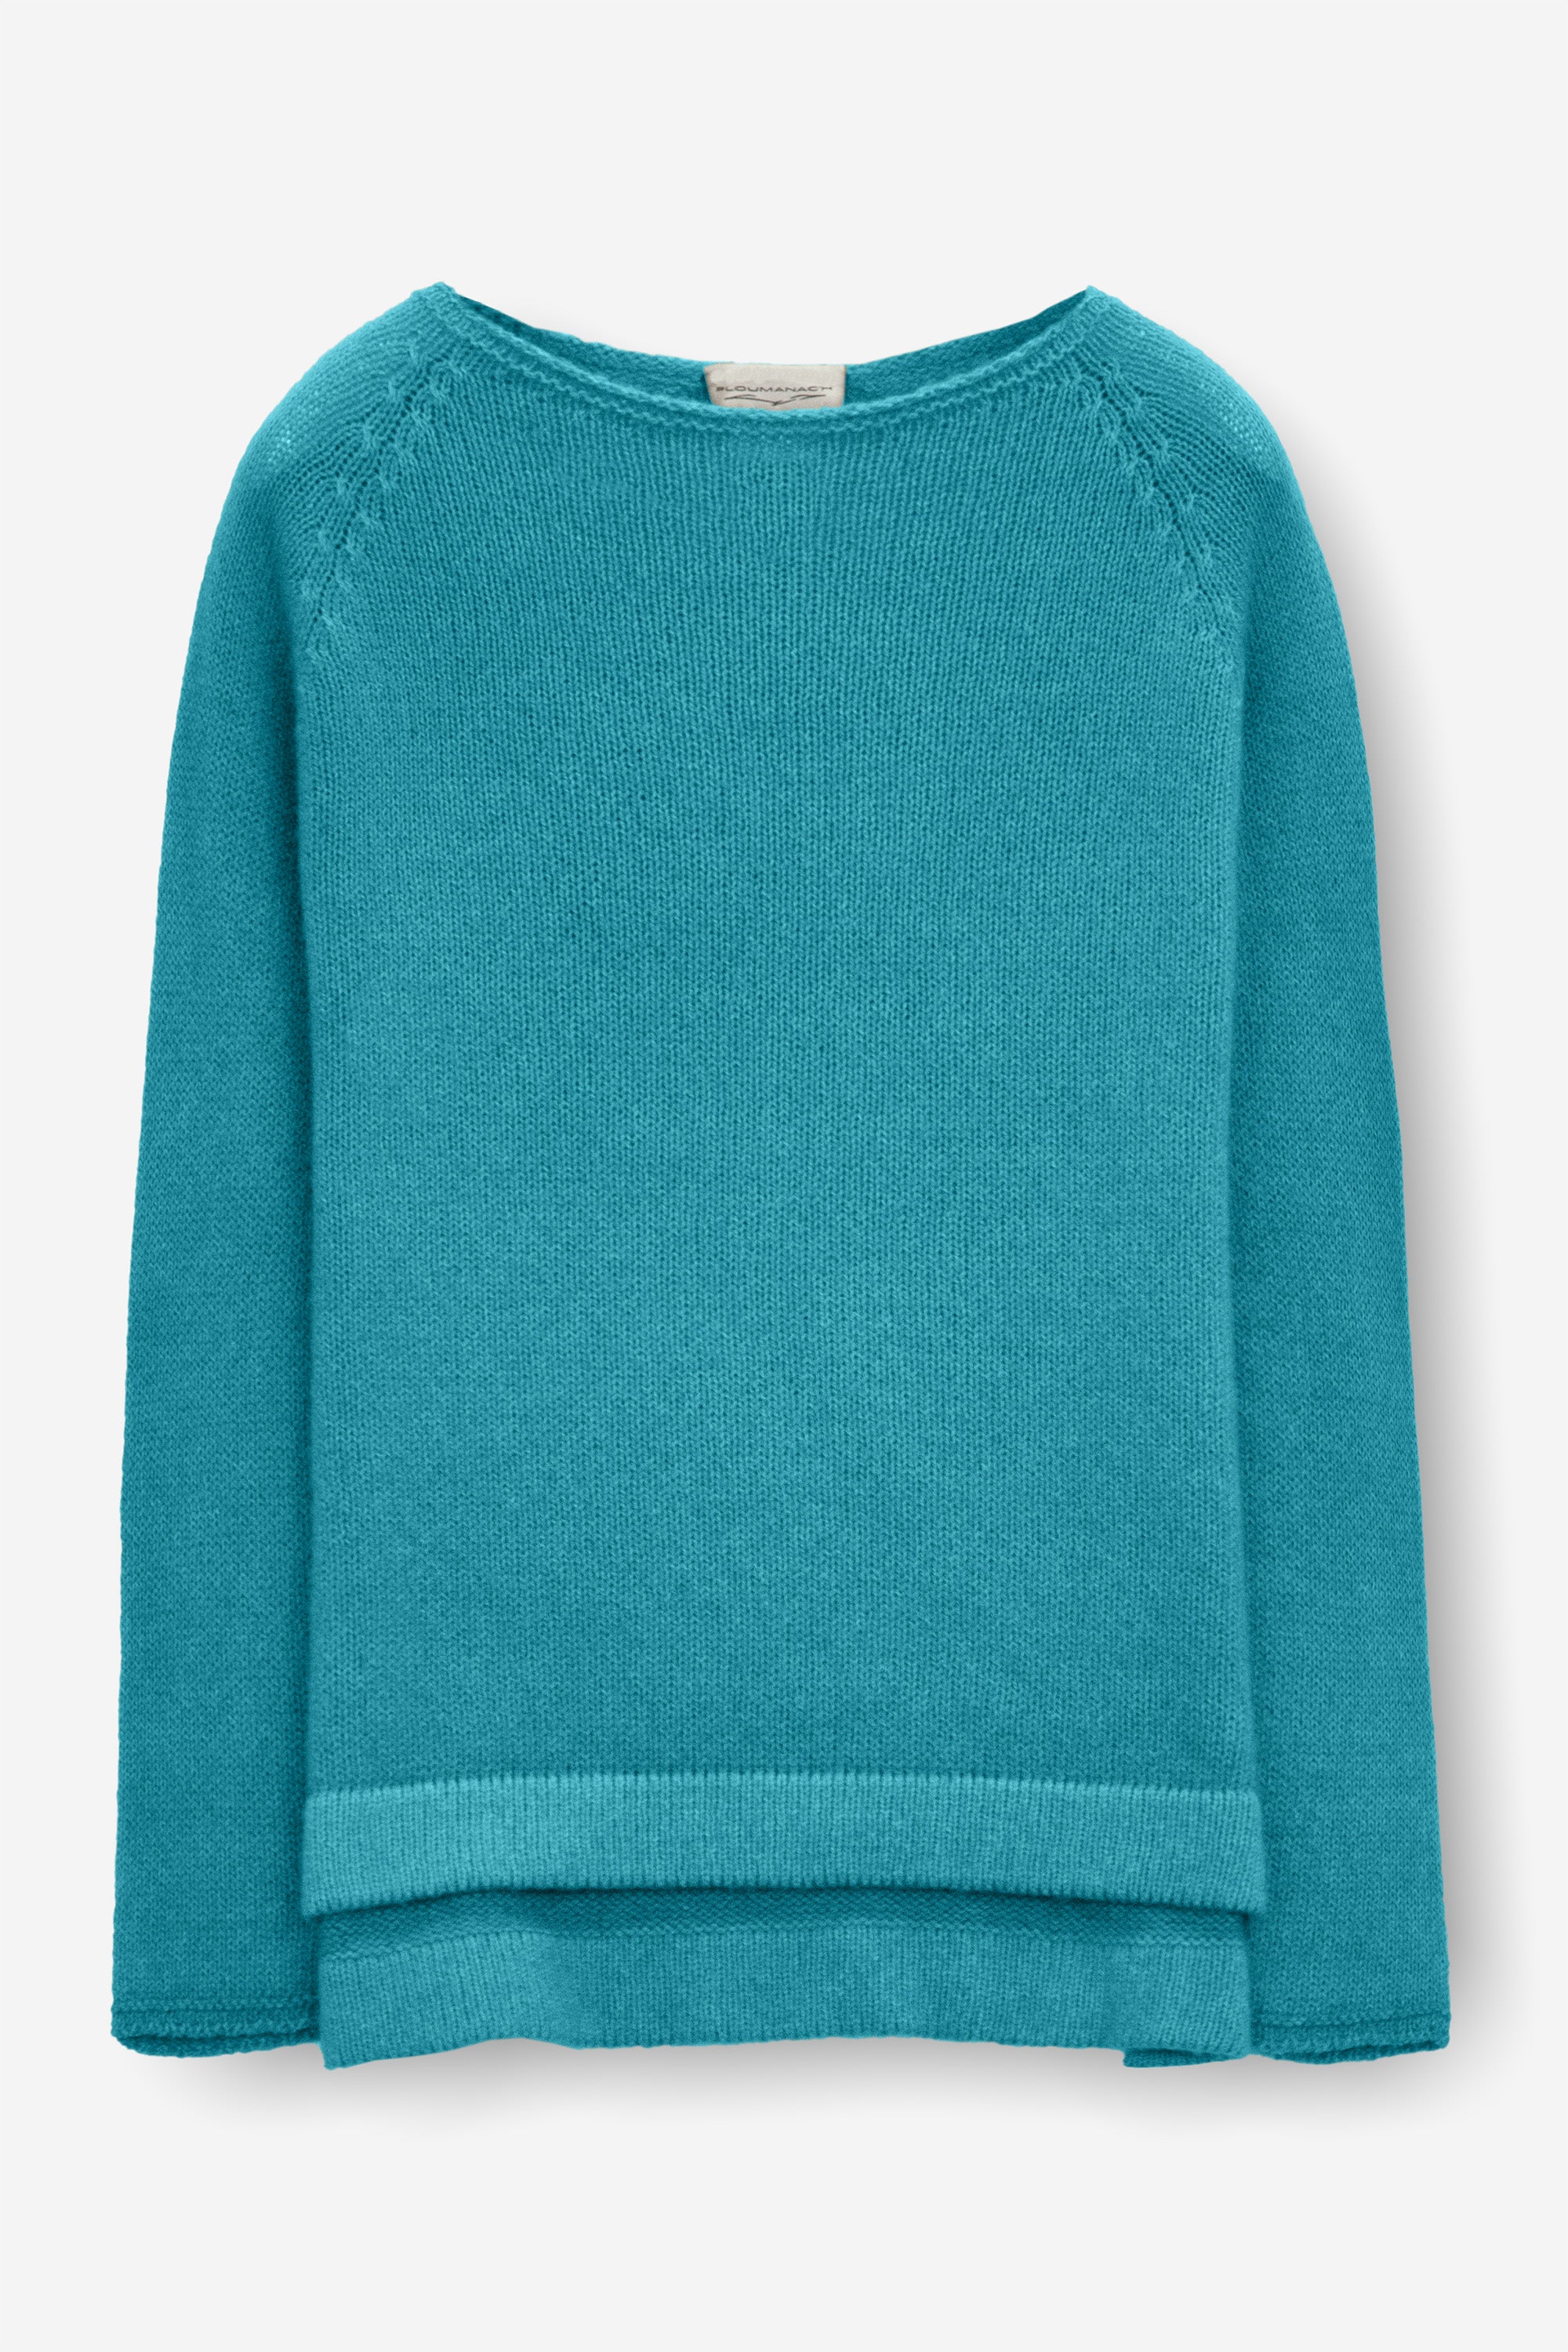 Appin Sweater - Aqua